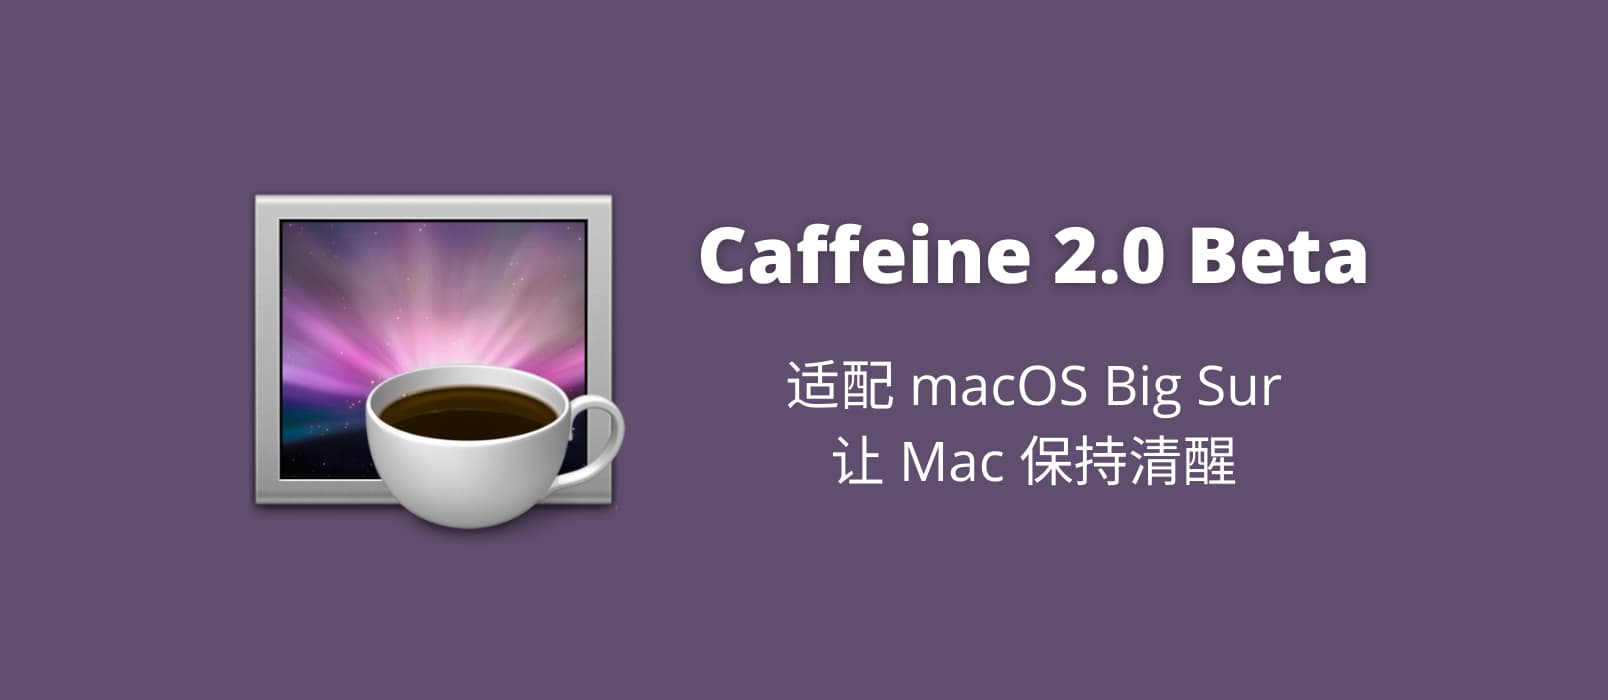 Caffeine 2.0 Beta - 适配 macOS Big Sur 的免休眠工具，让你的 Mac 暂时保持清醒